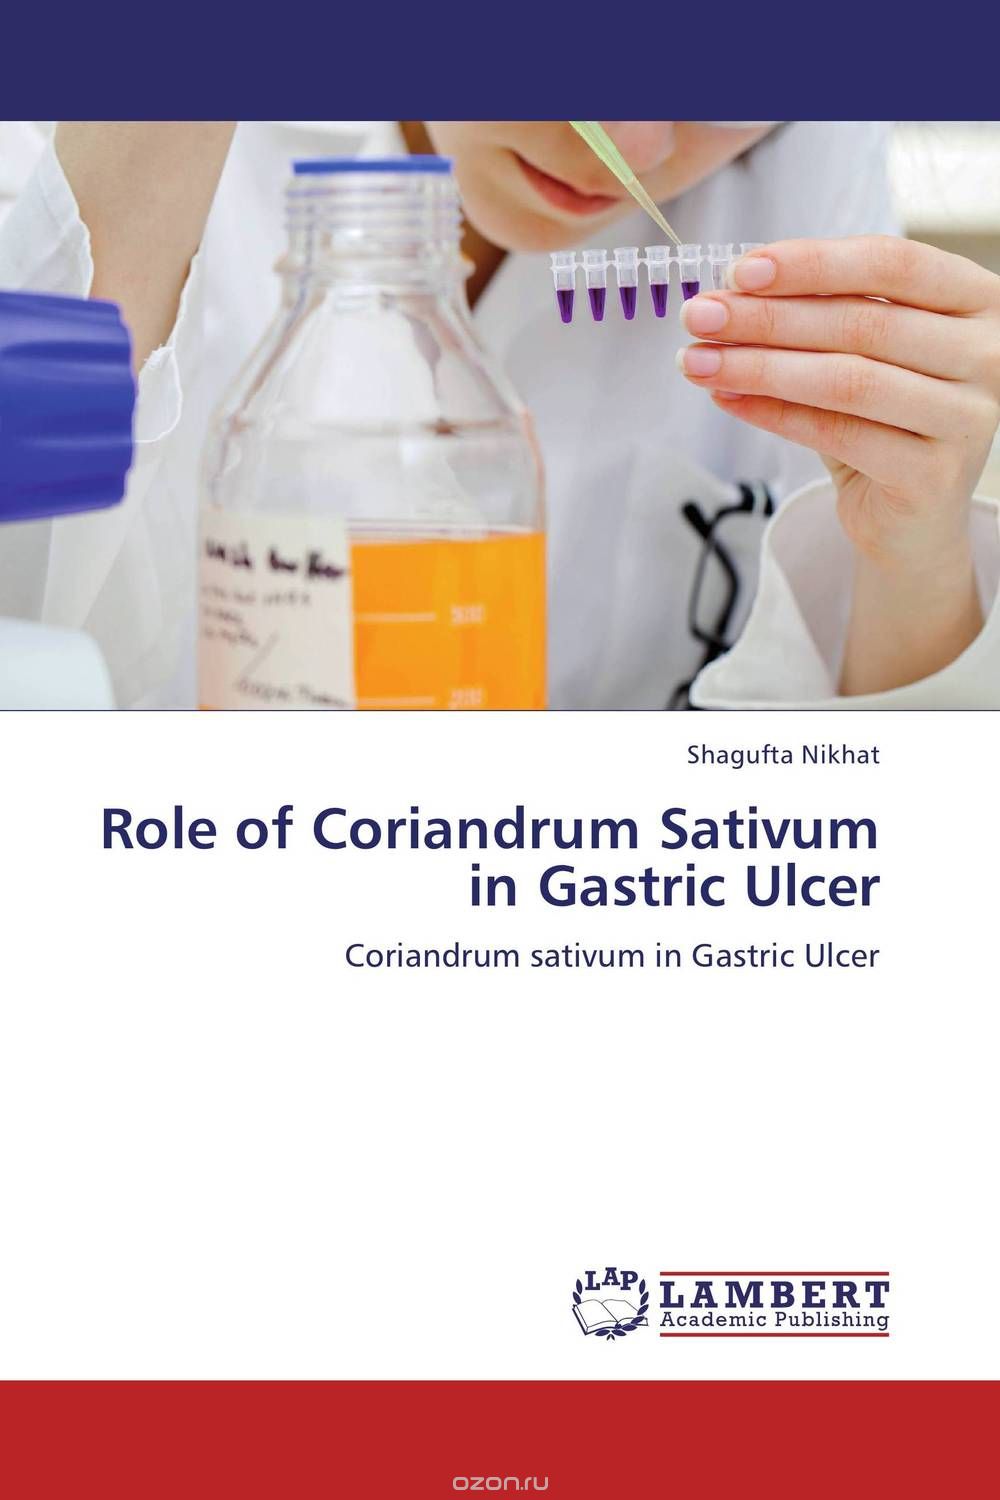 Role of Coriandrum Sativum in Gastric Ulcer